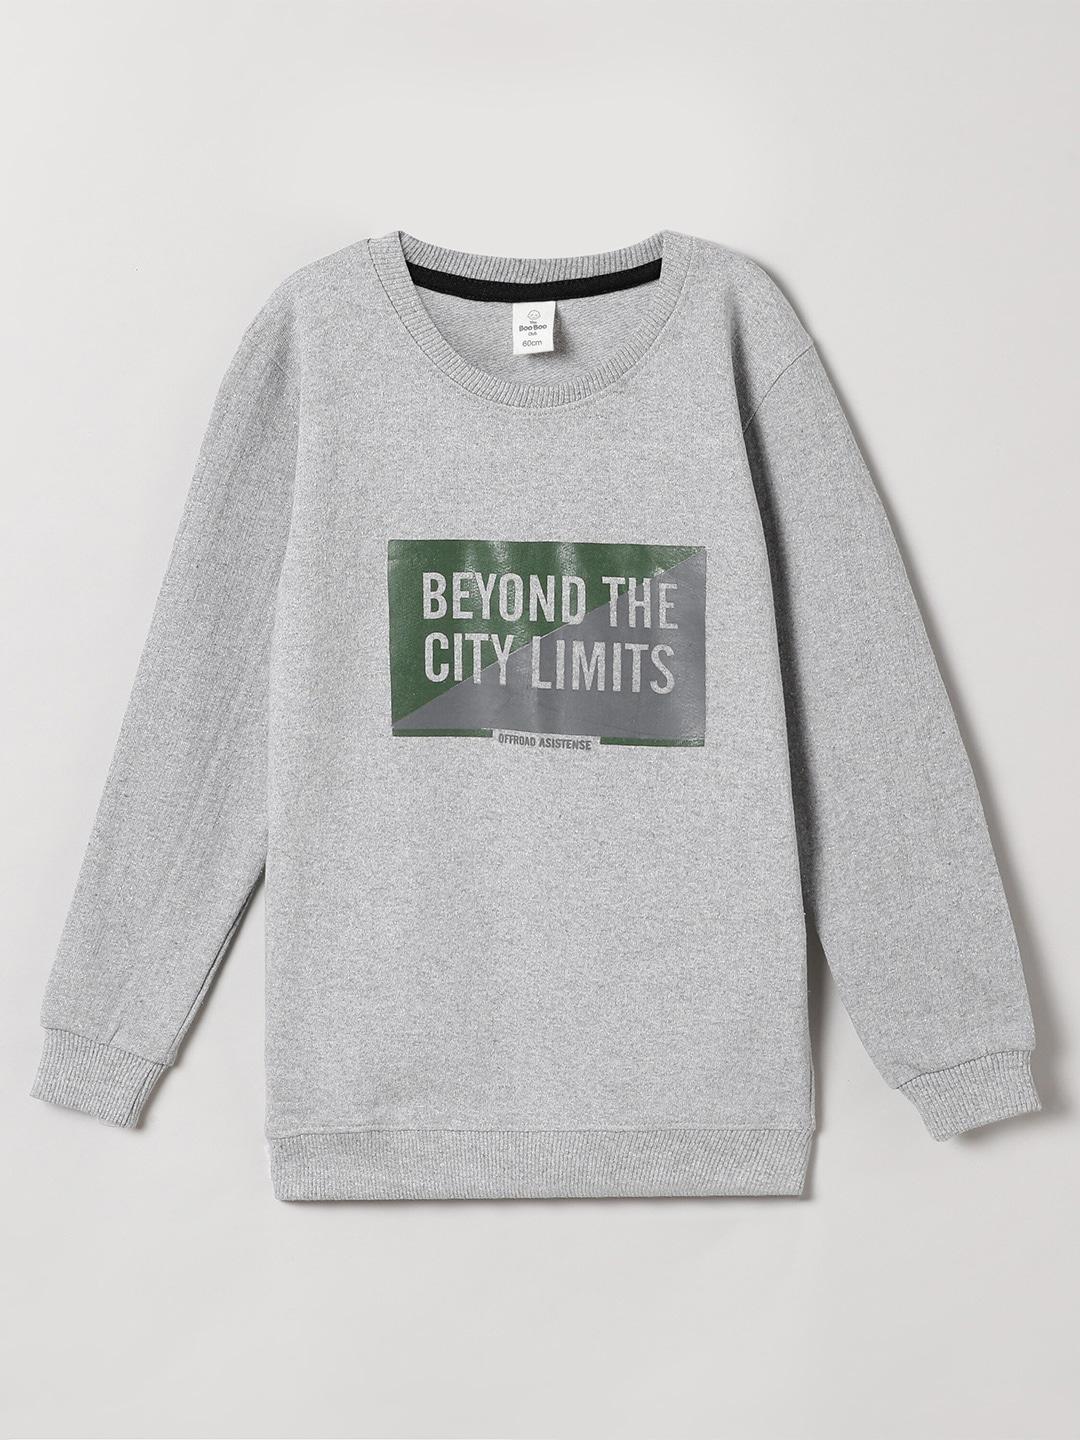 the boo boo club unisex kids grey cotton printed sweatshirt